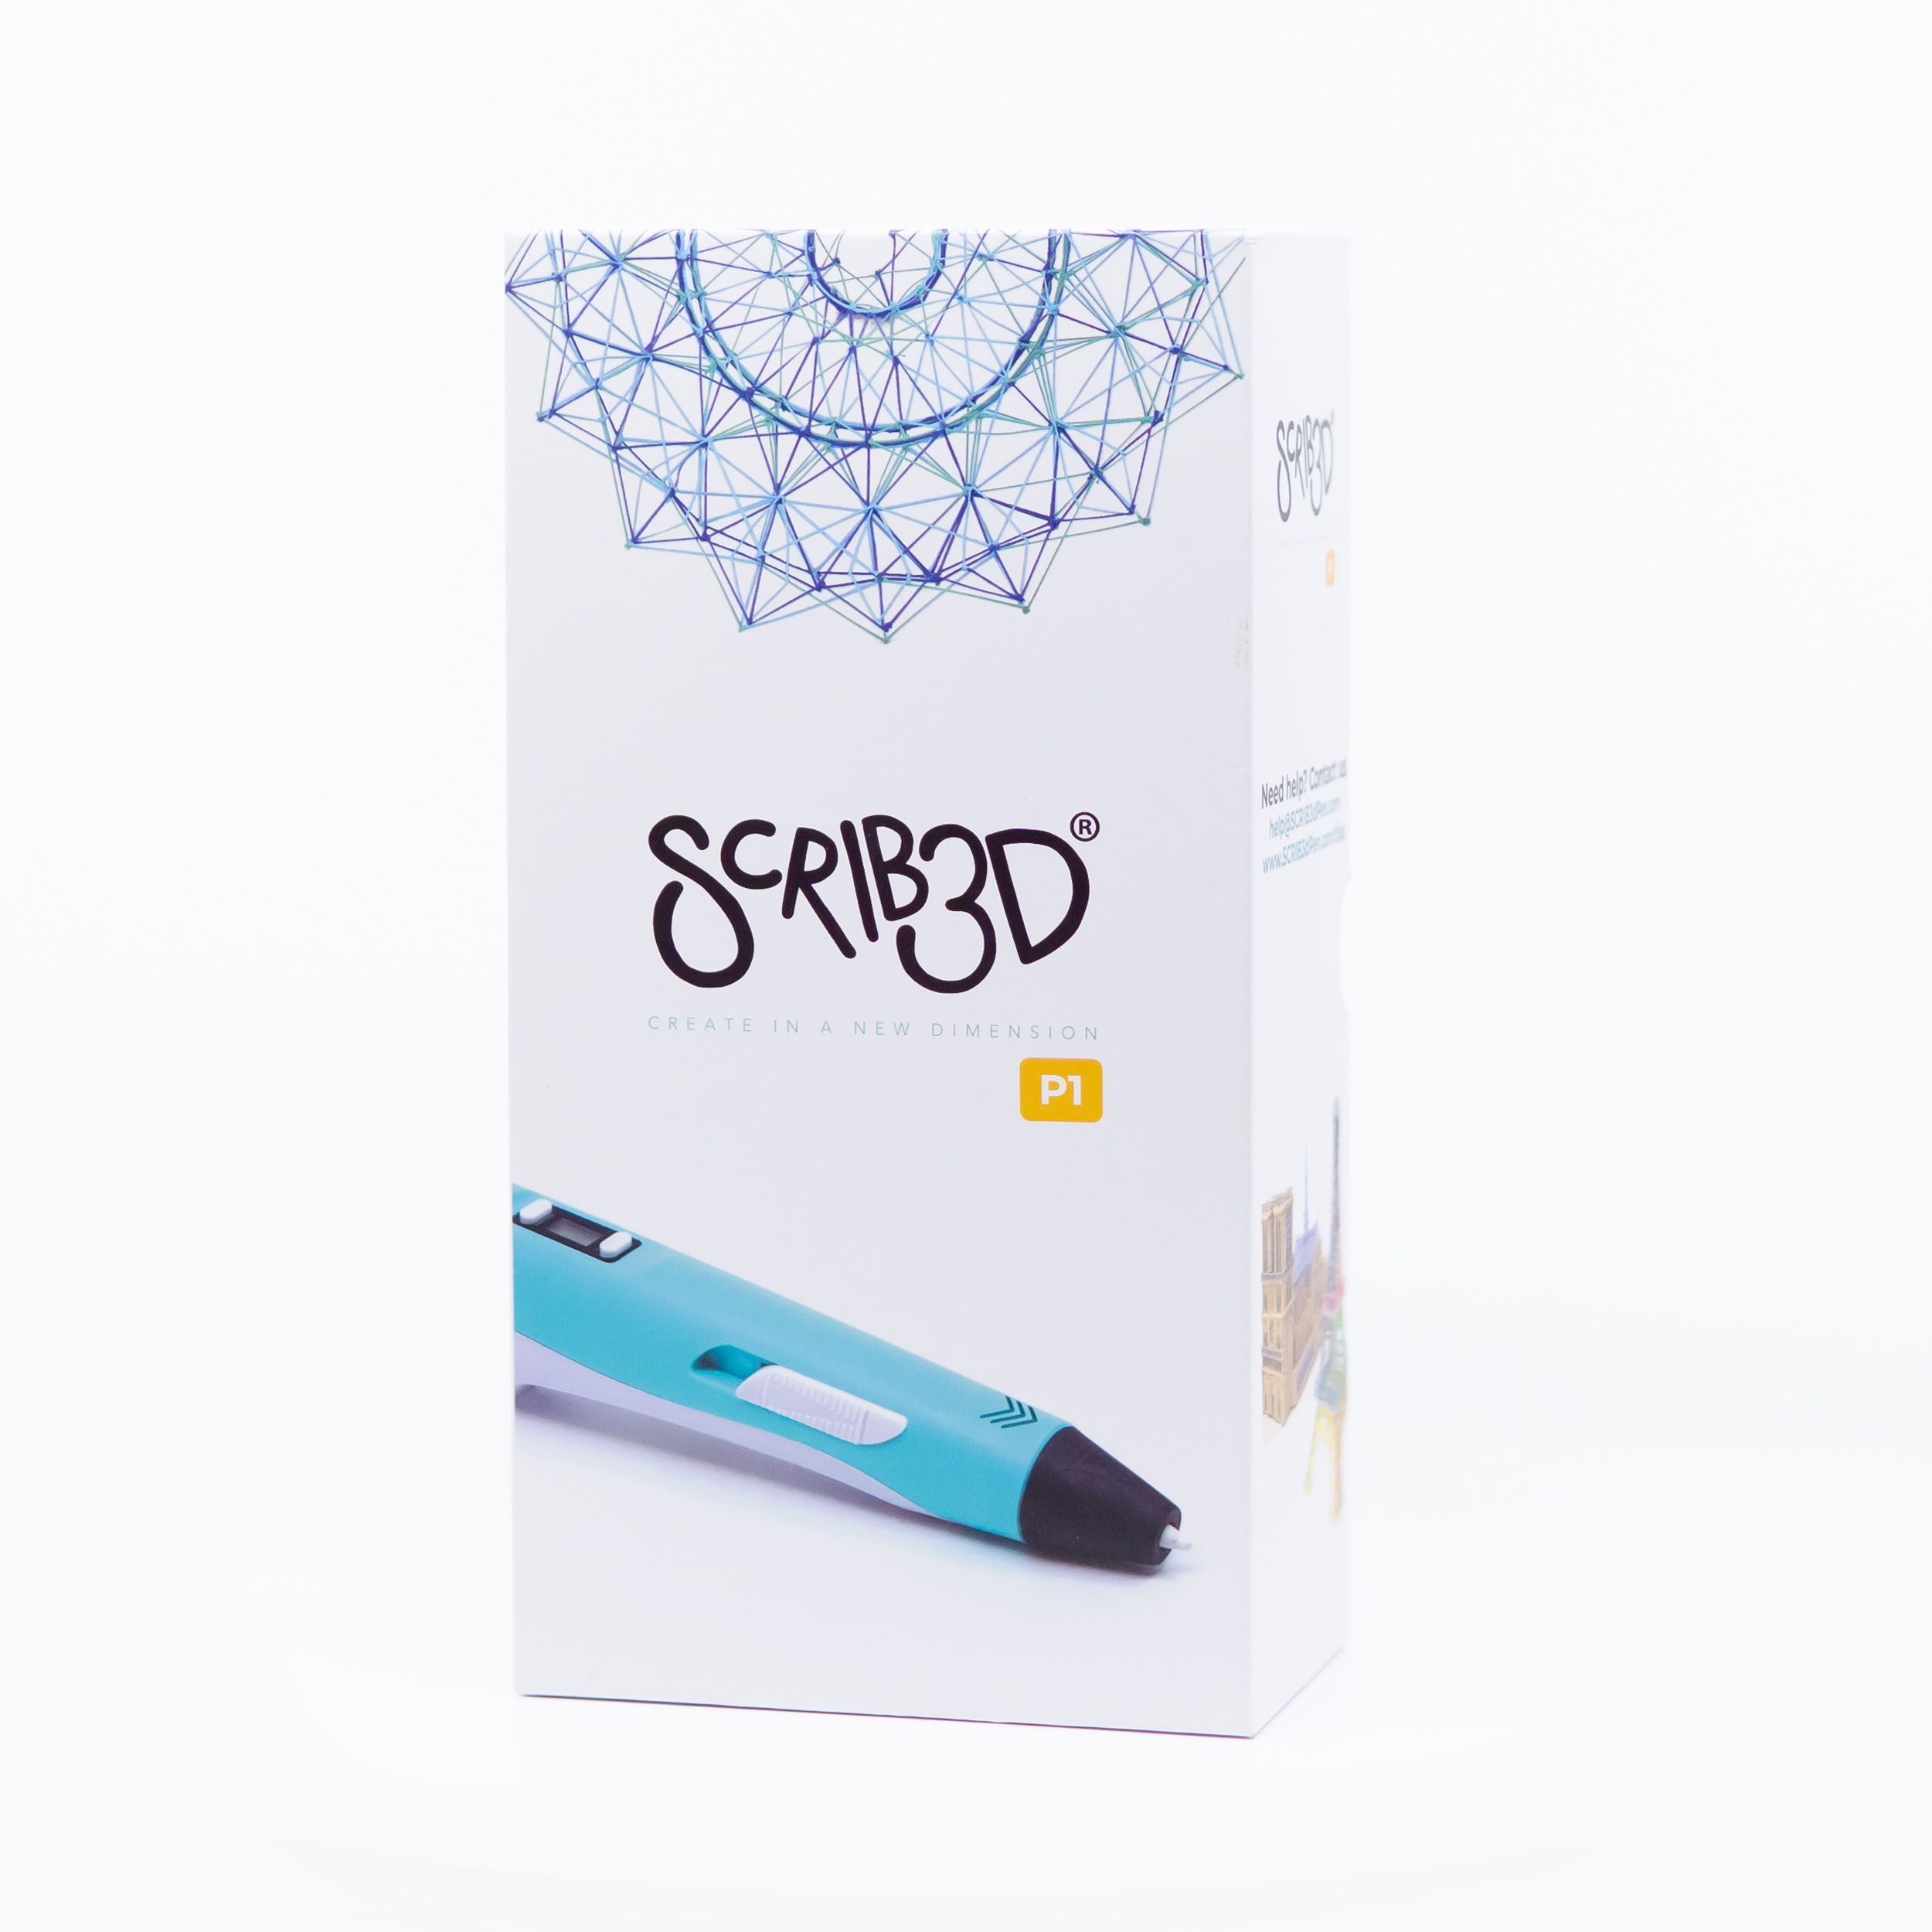 SCRIB3D P1 3D Pen + PIKA3D Super 3D Pen - Complete with PLA Filament  Colors, Stencils, Guides, and Chargers